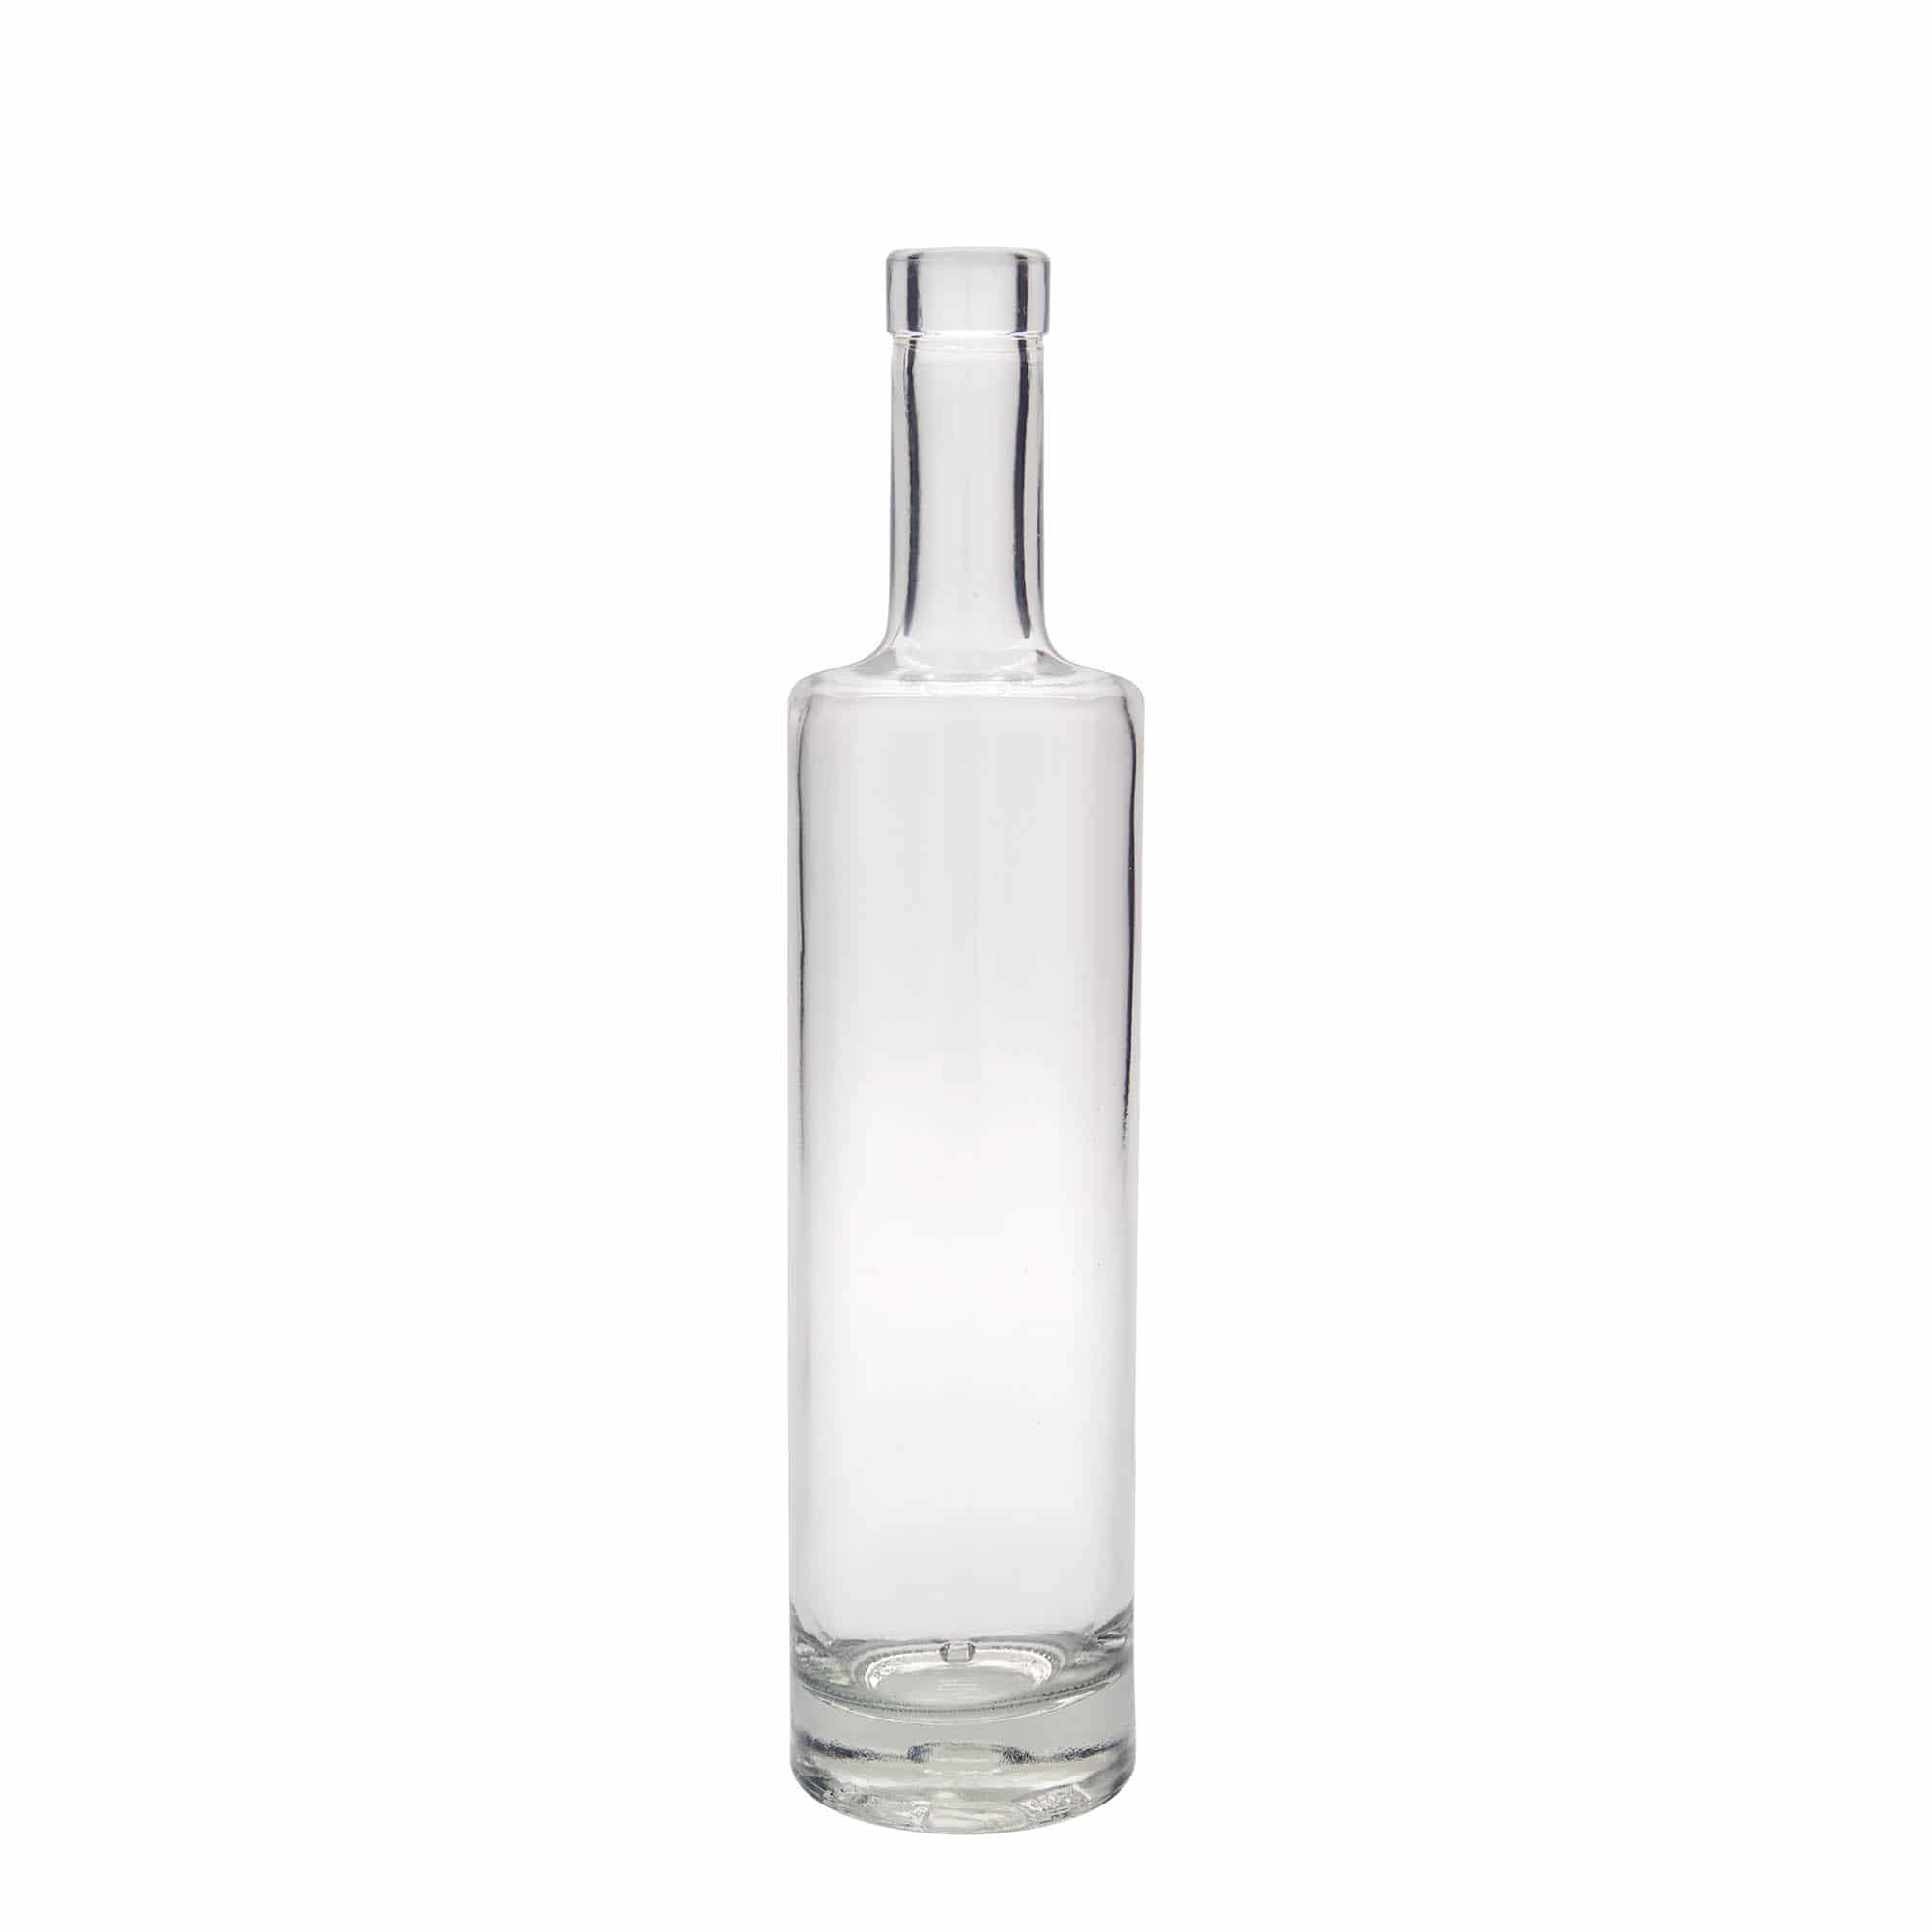 Botella de vidrio 'Centurio' de 500 ml, boca: corcho